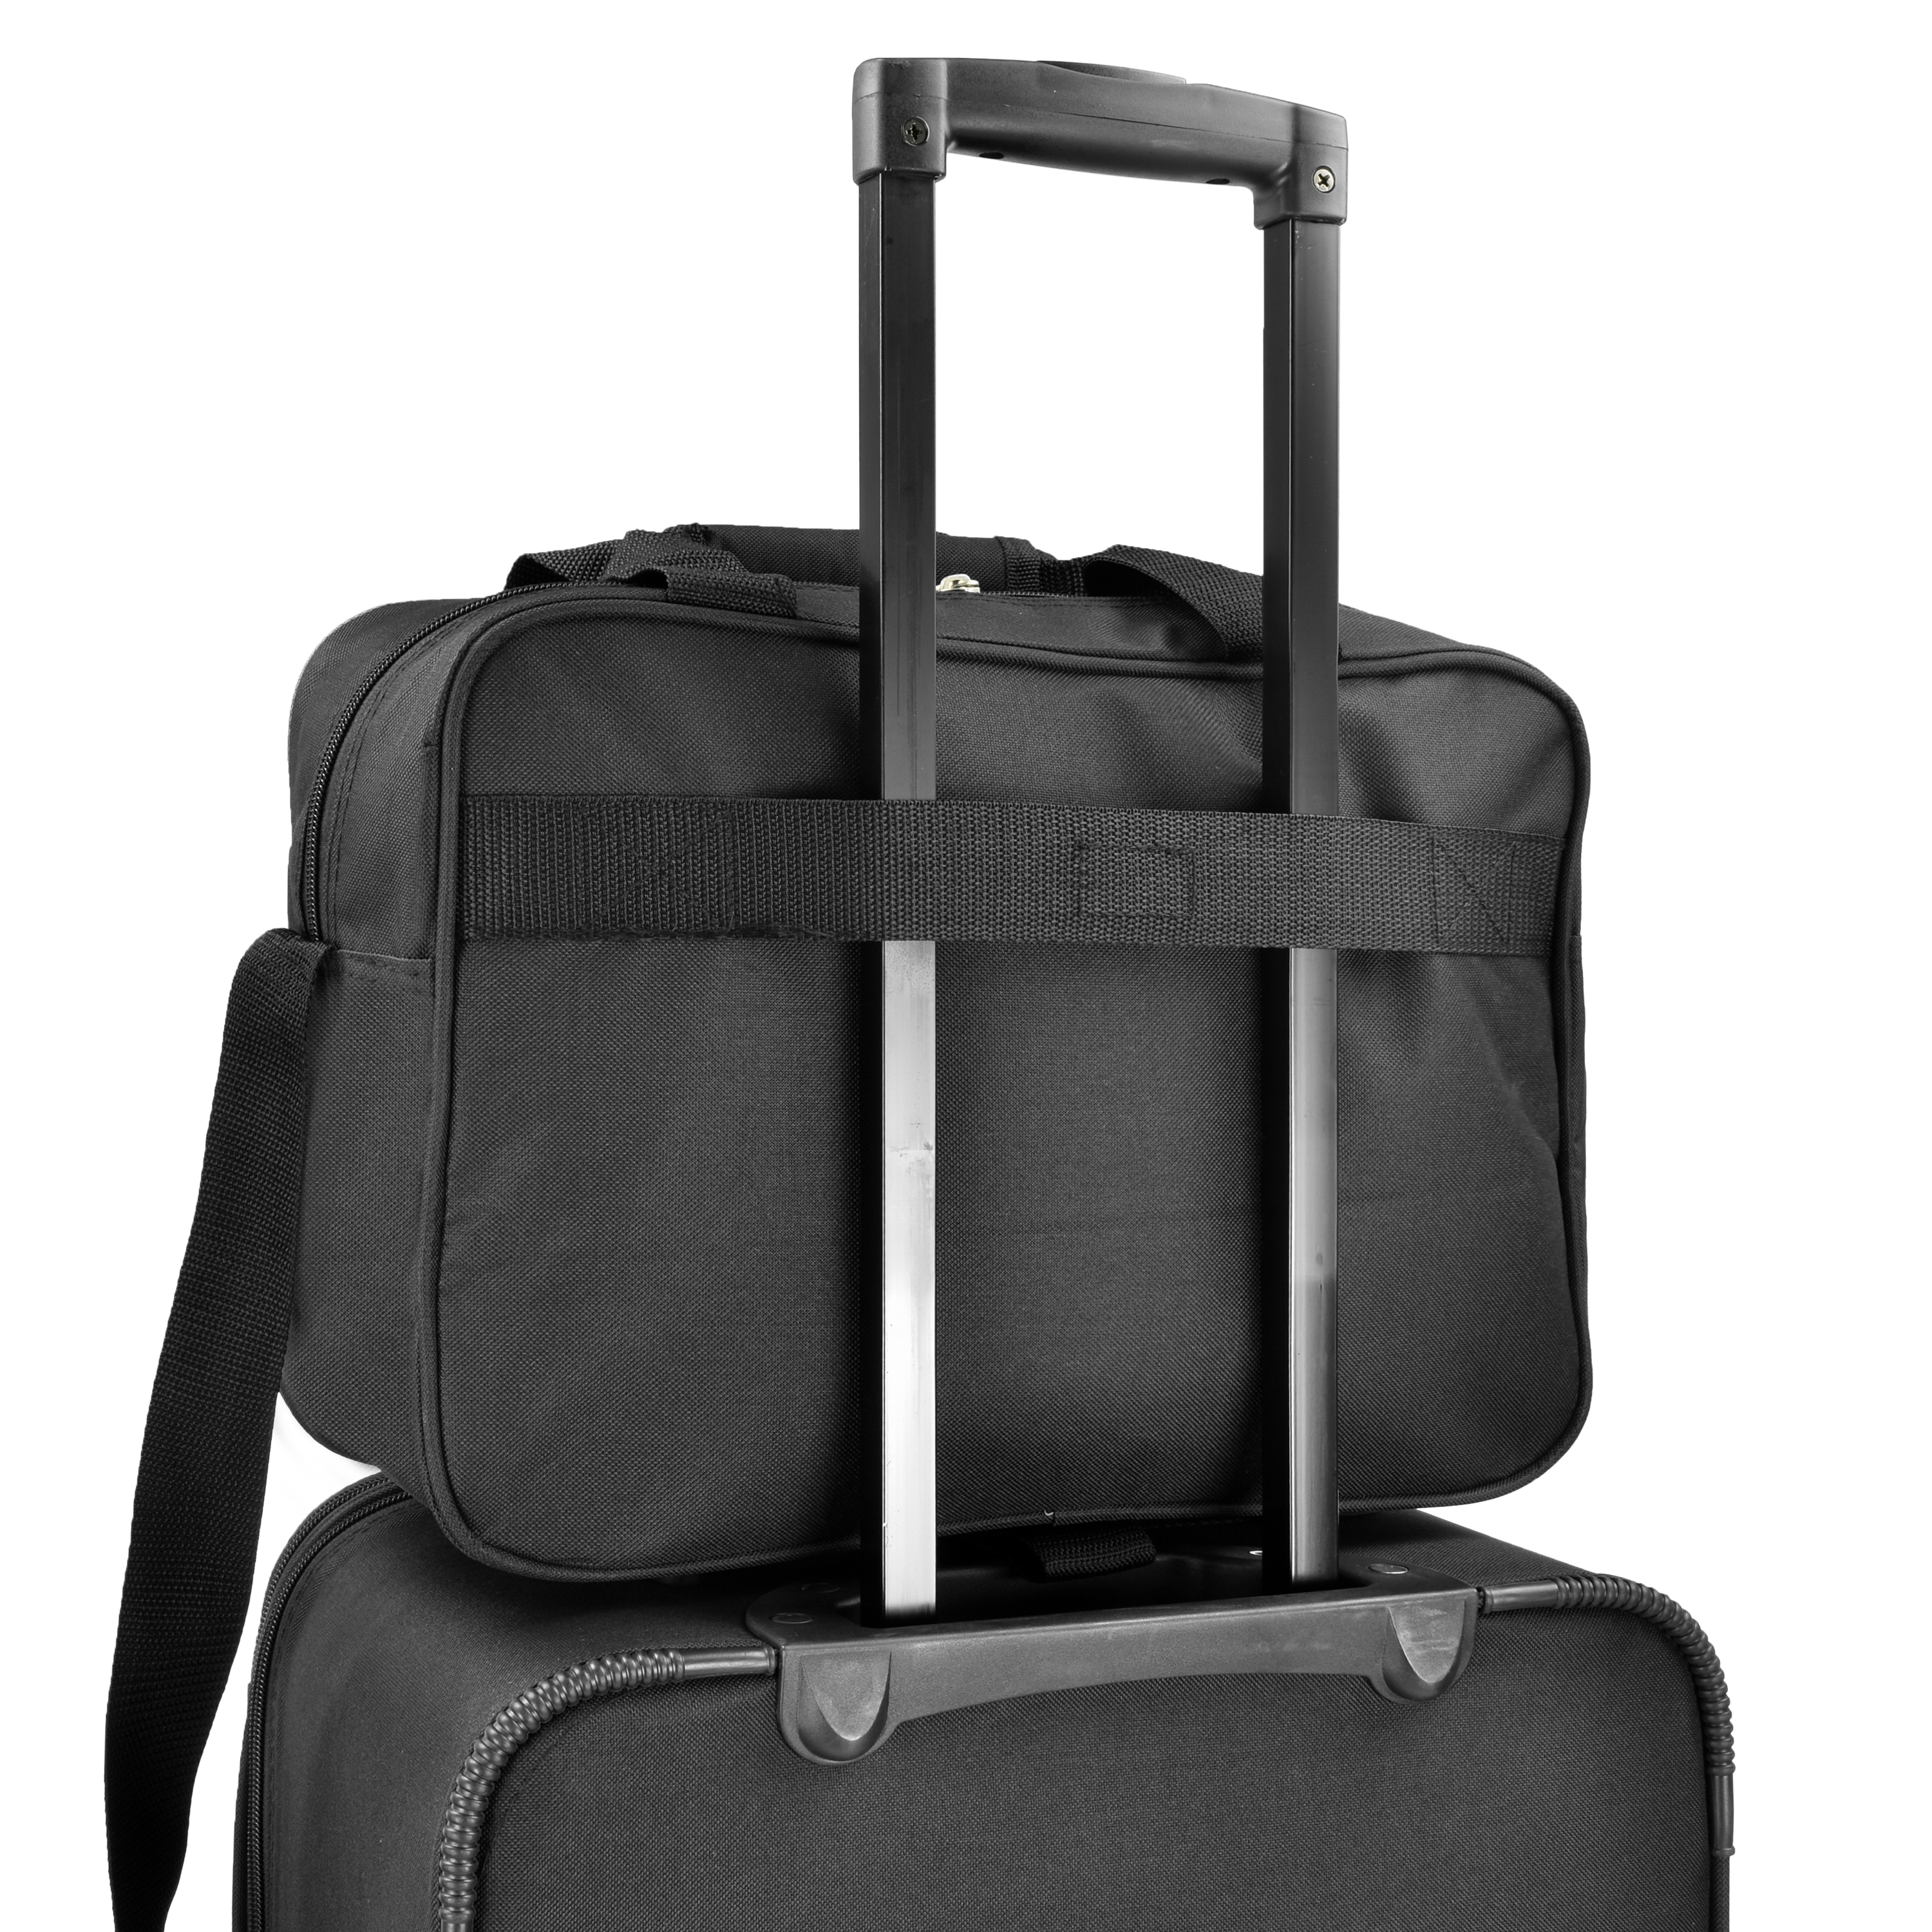 U.S. Traveler New Yorker 4-Piece Luggage Set - image 4 of 7